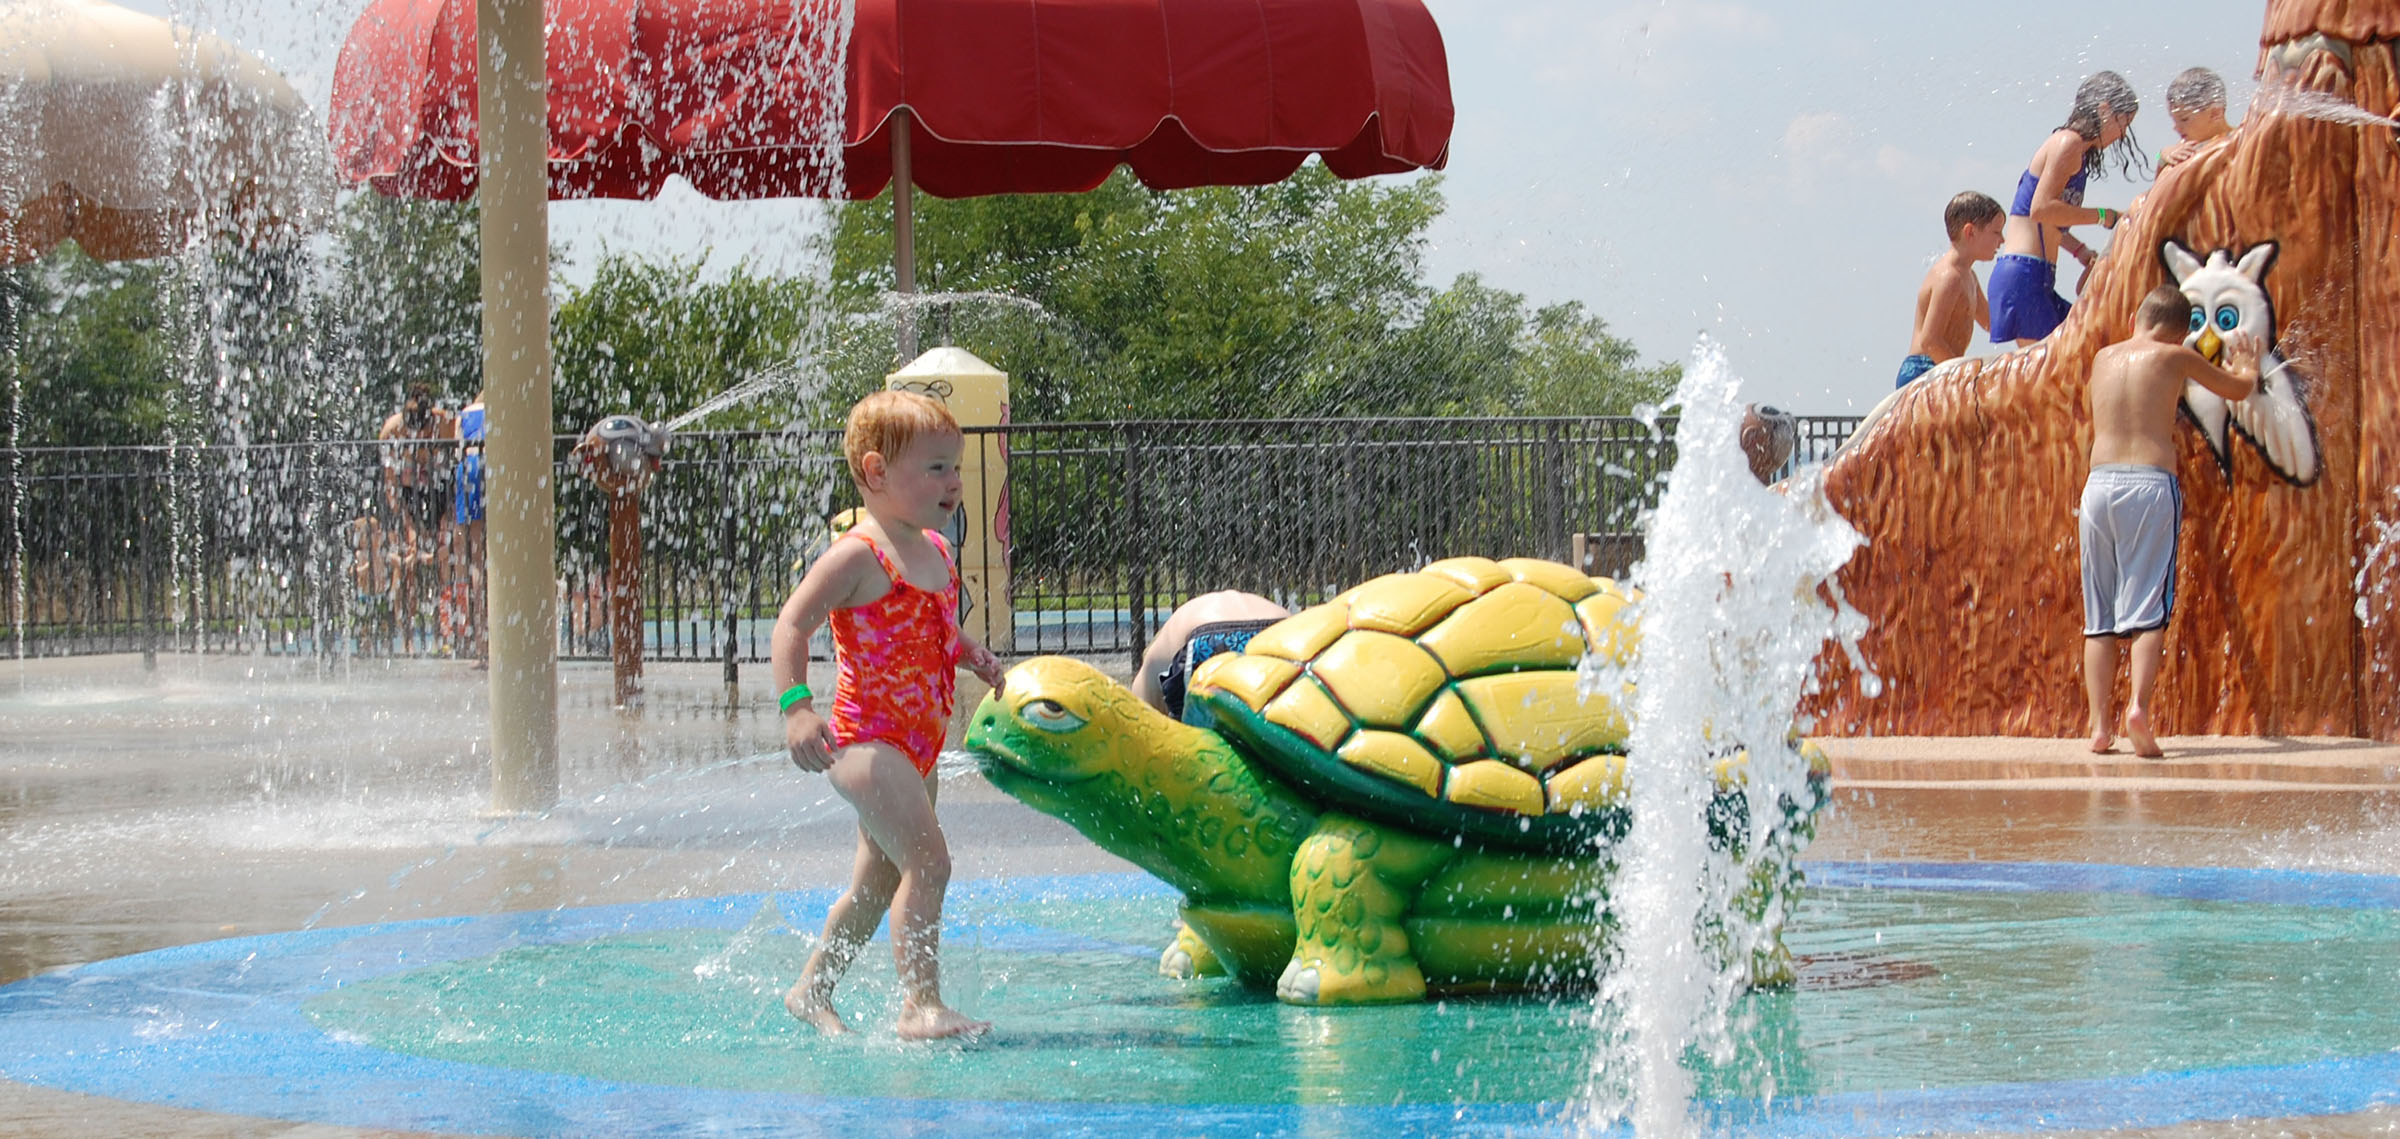 Michigan & Ohio Splash Parks - Splash Pad - Spray Parks